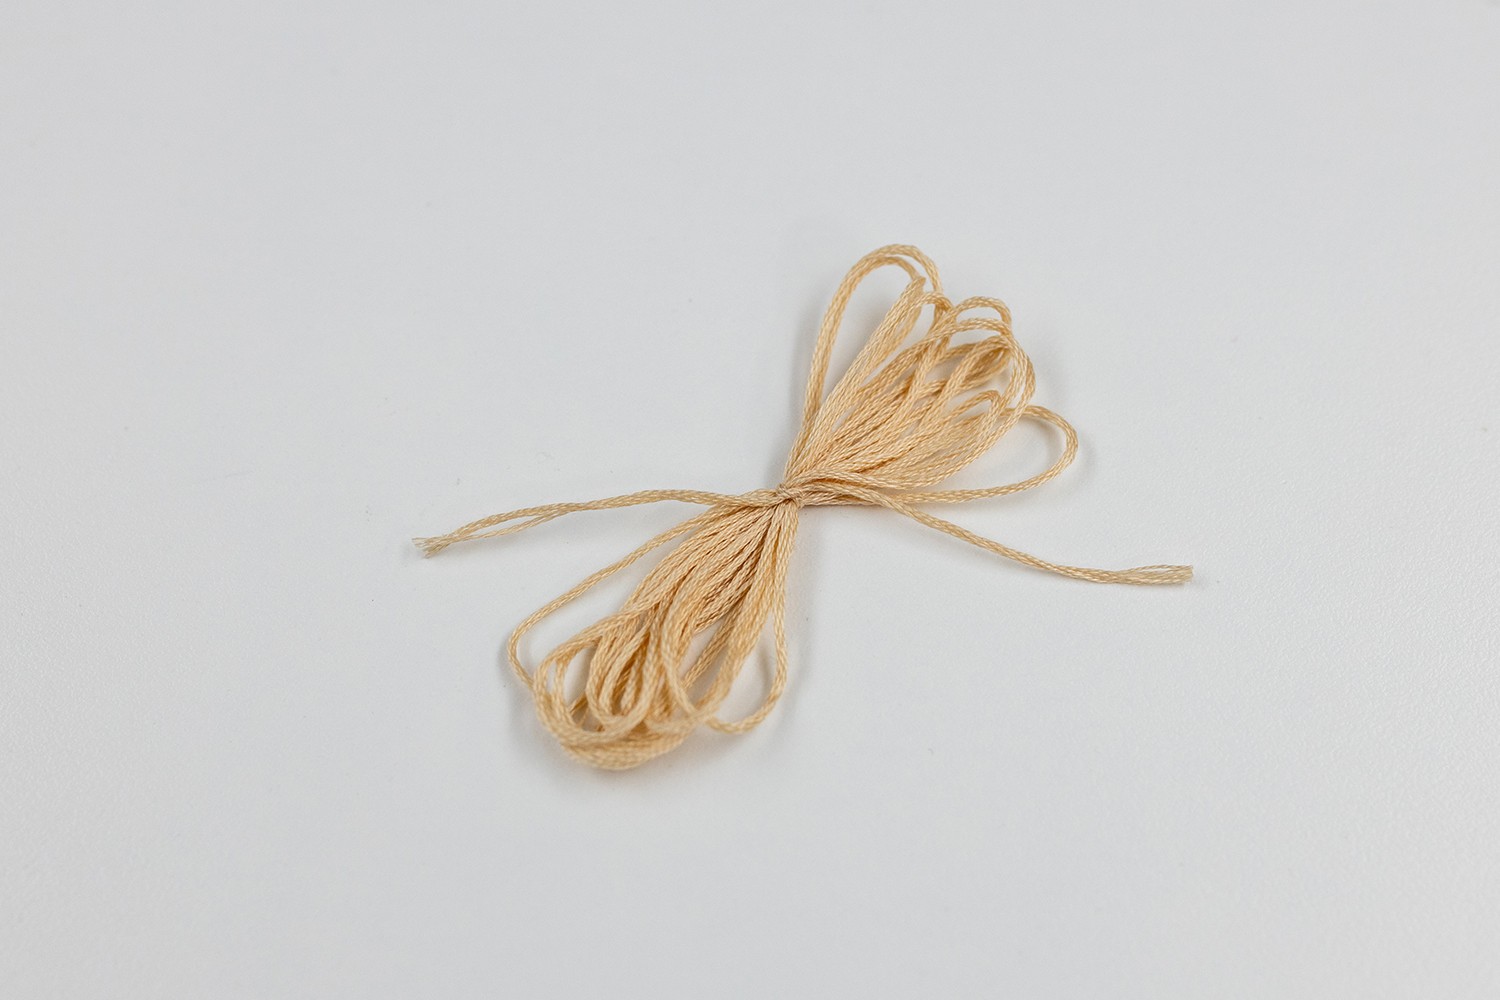 A bundle of thread is tied using thread.